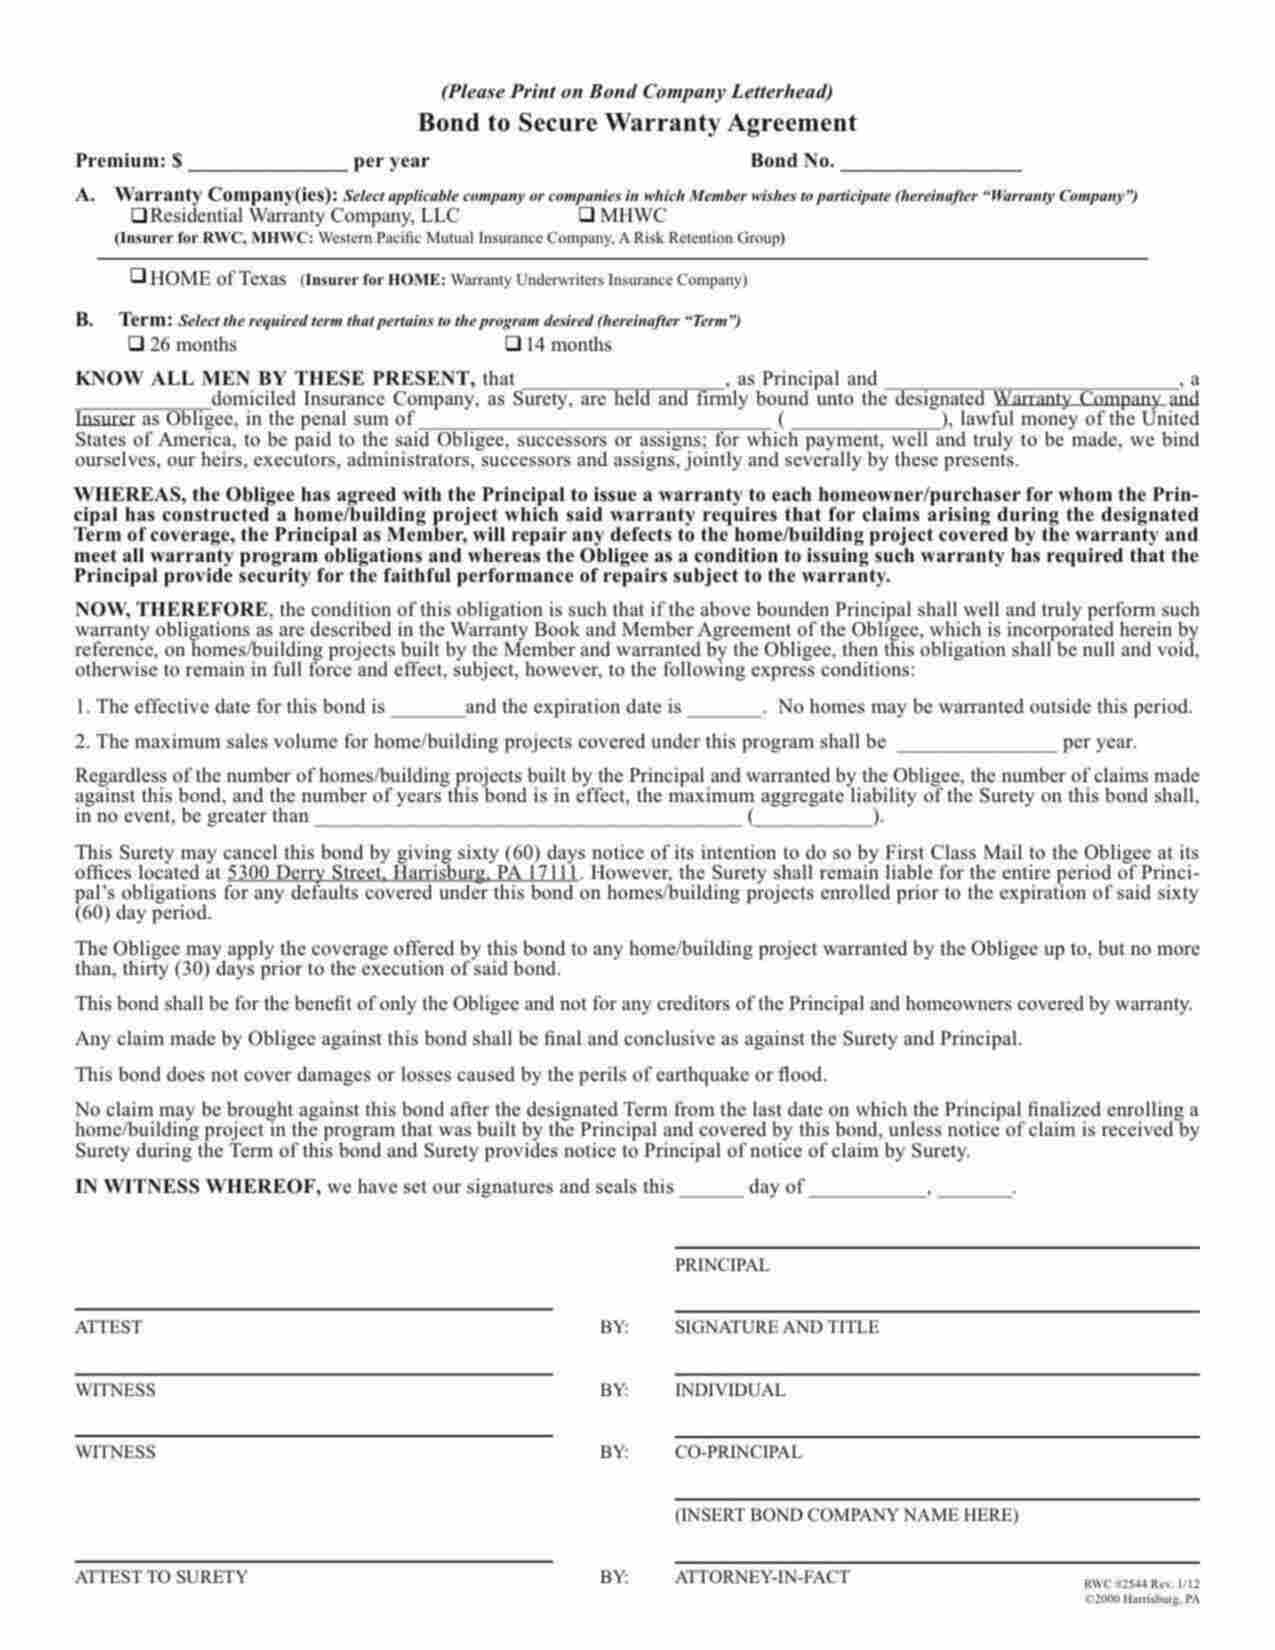 Pennsylvania Warranty Agreement (26 months) Bond Form